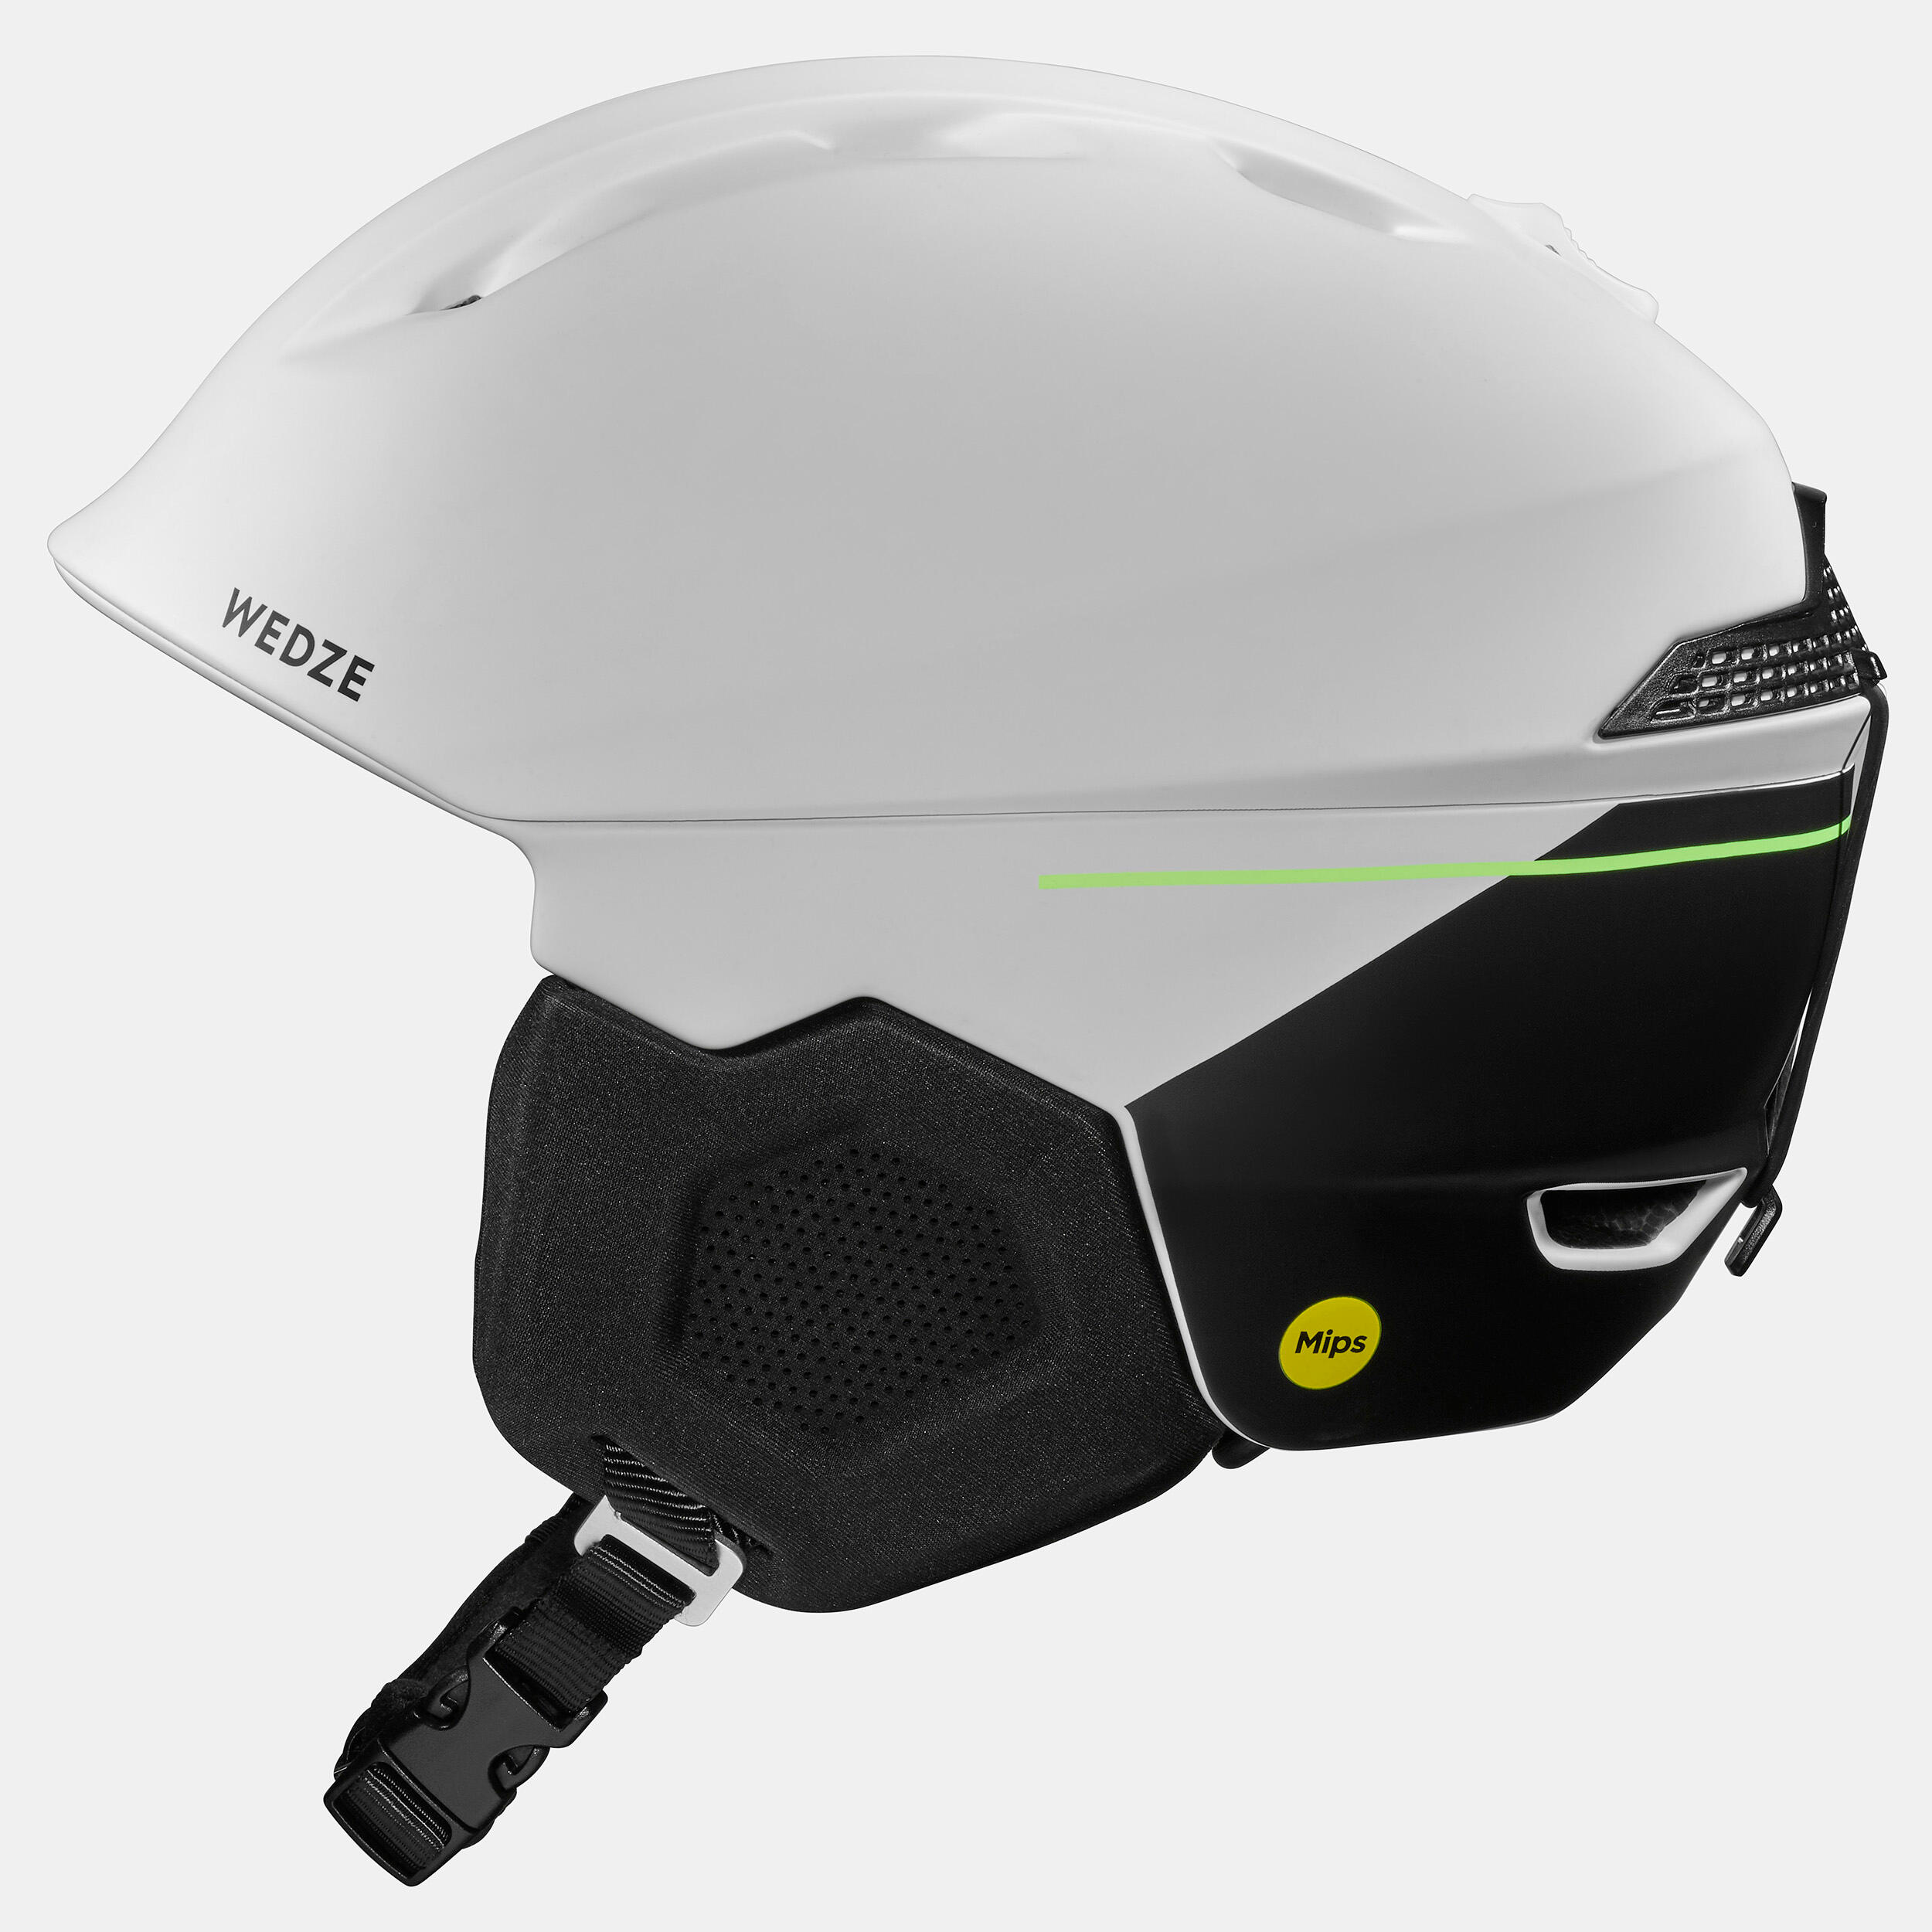 Adult ski helmet - PST 900 MIPS - white and black 5/12